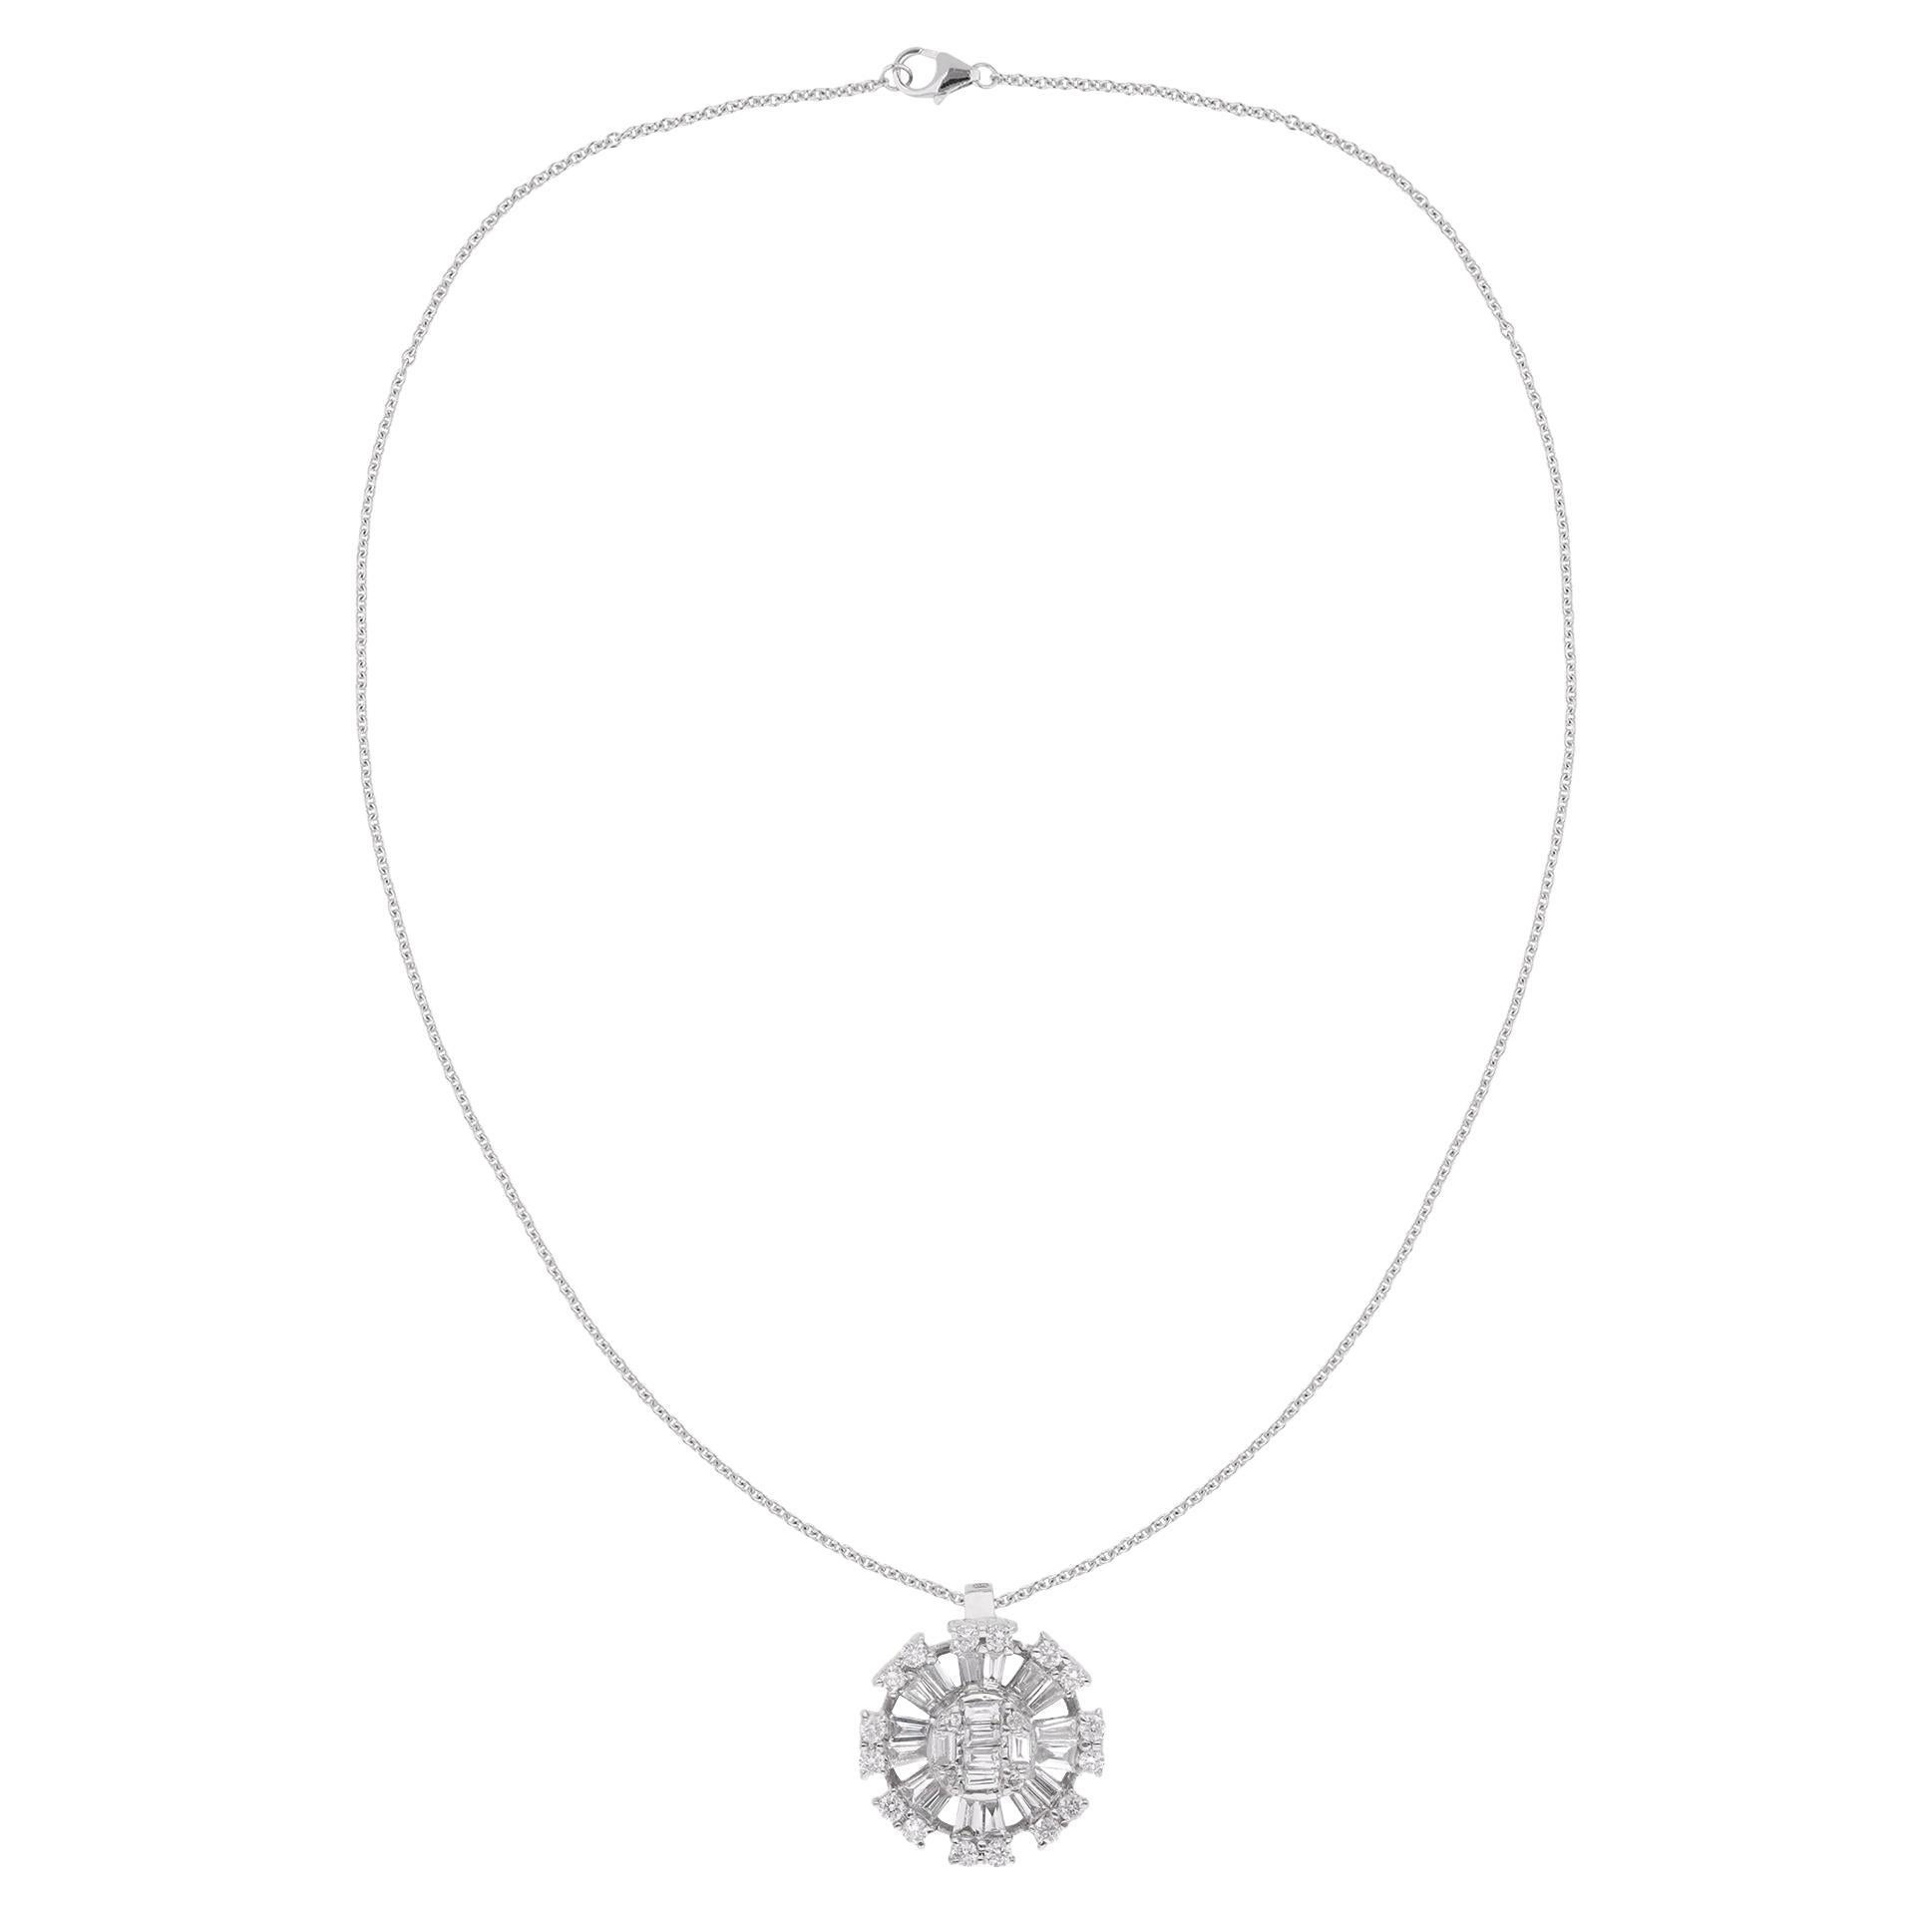 0.7 Carat Baguette & Round Diamond Designer Pendant Necklace 18 Karat White Gold